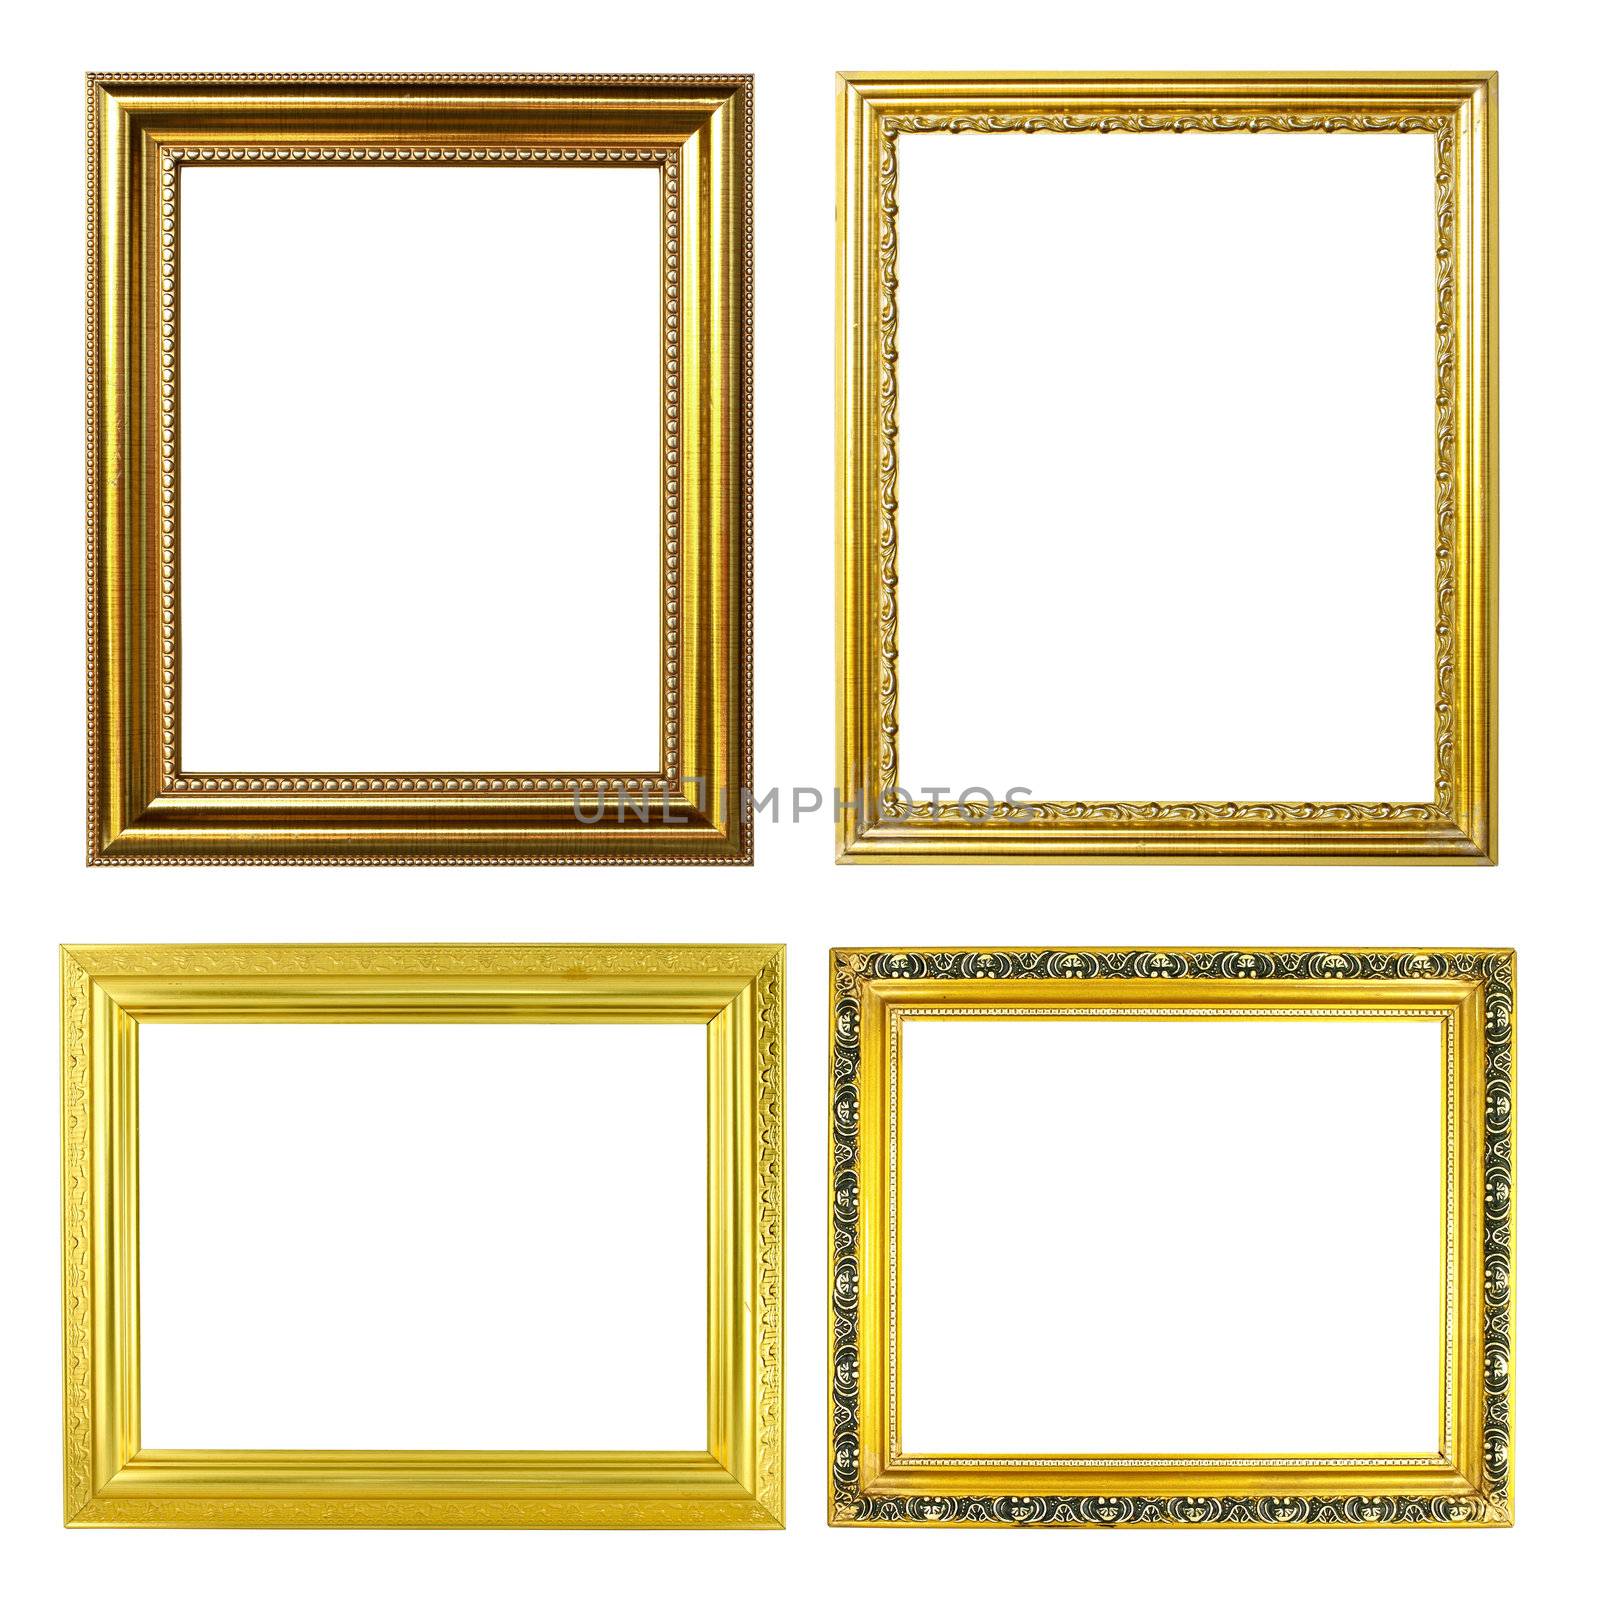 4 golden frame on white background by geargodz